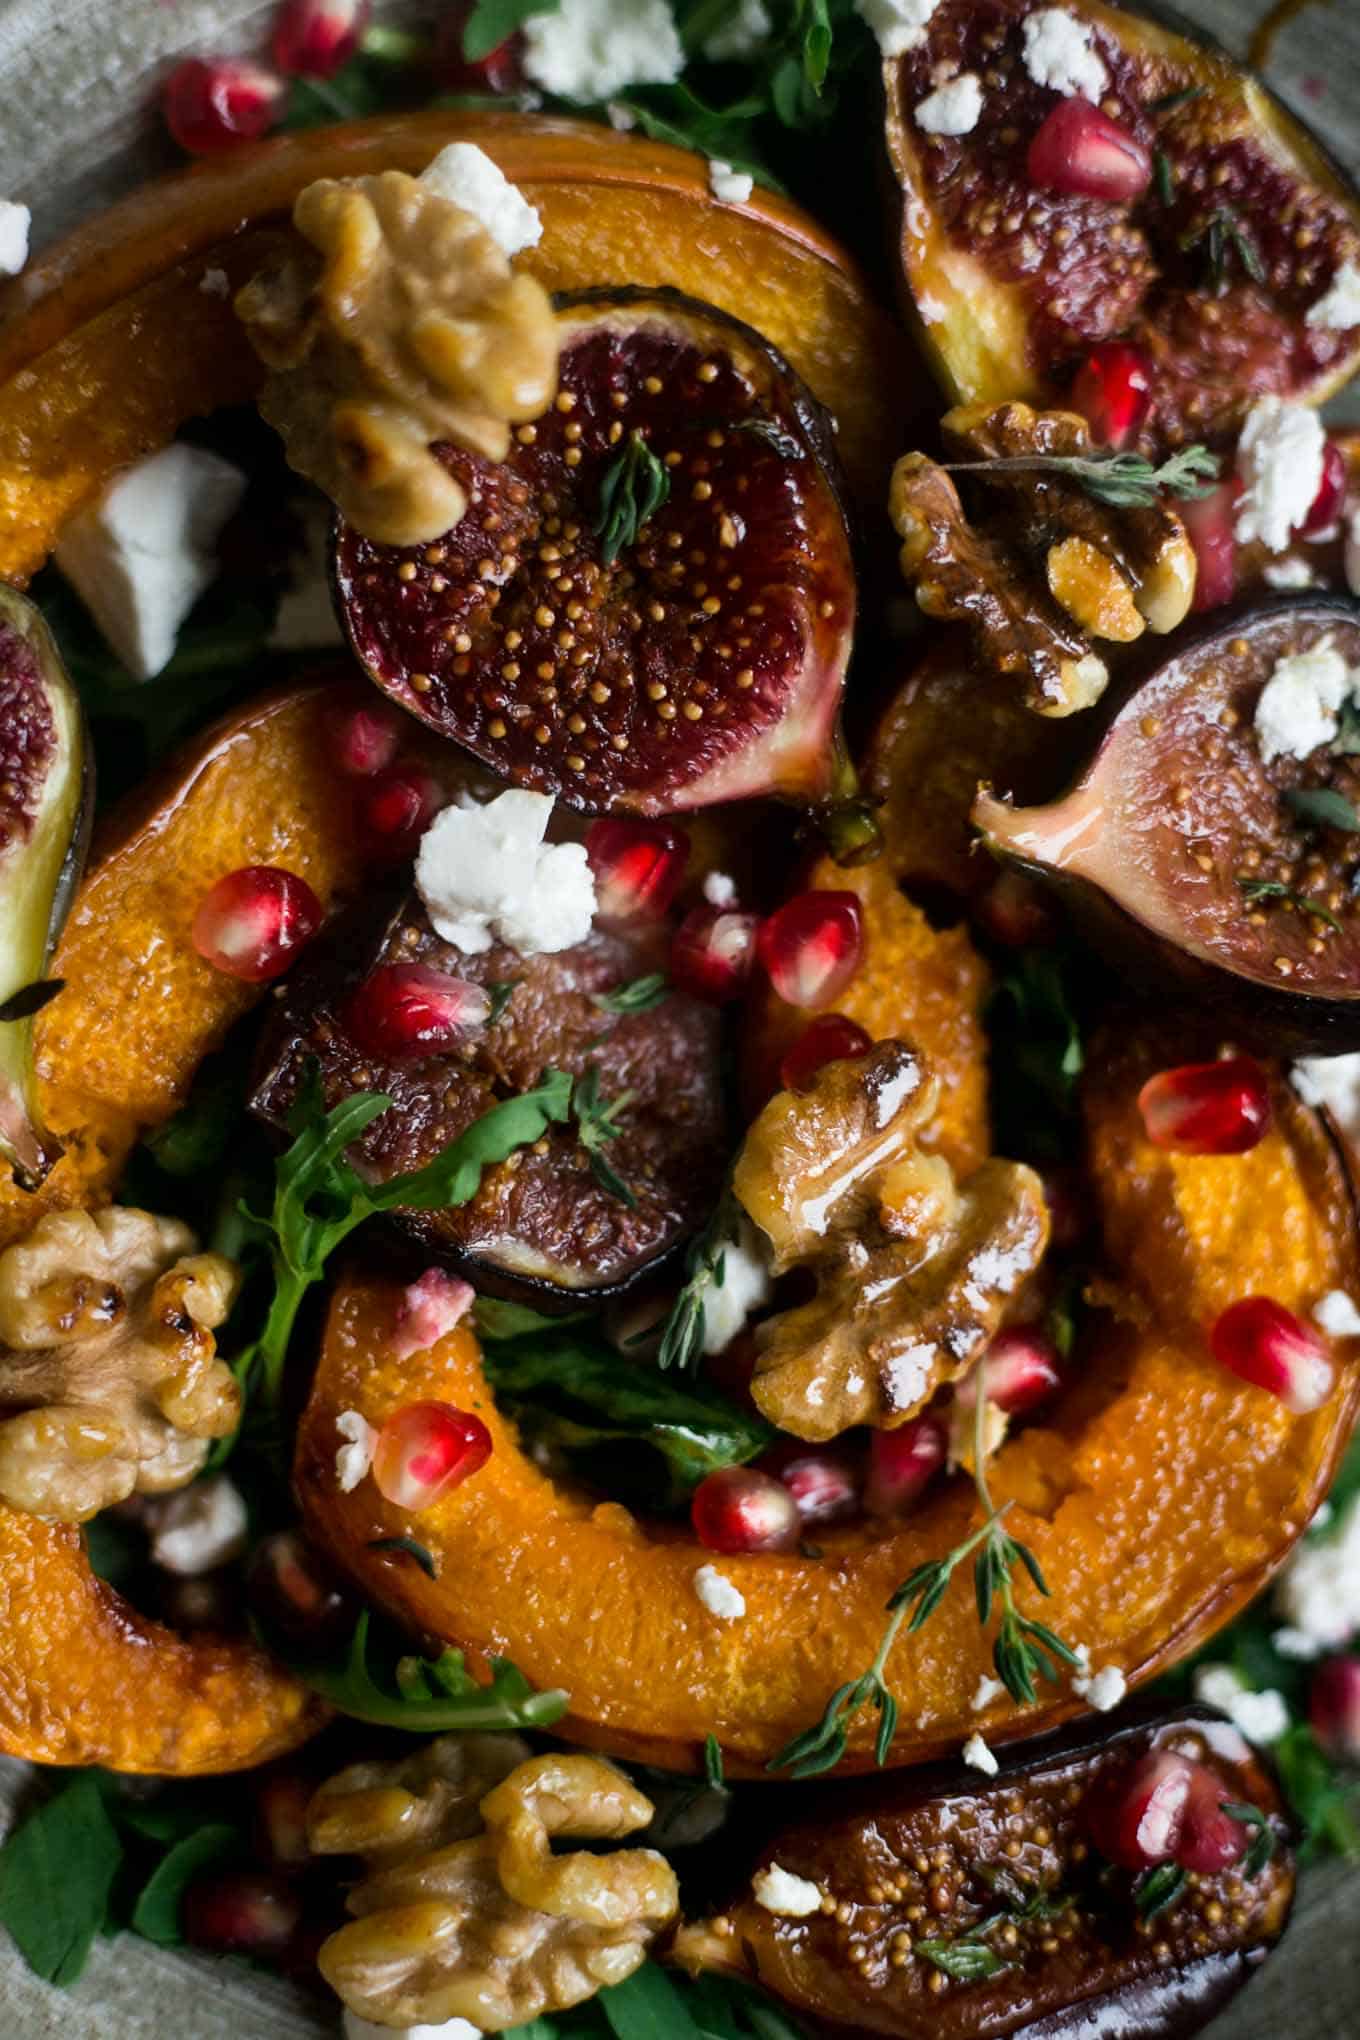 Roasted pumpkin and walnut salad with #vegan feta and figs | via @annabanana.co